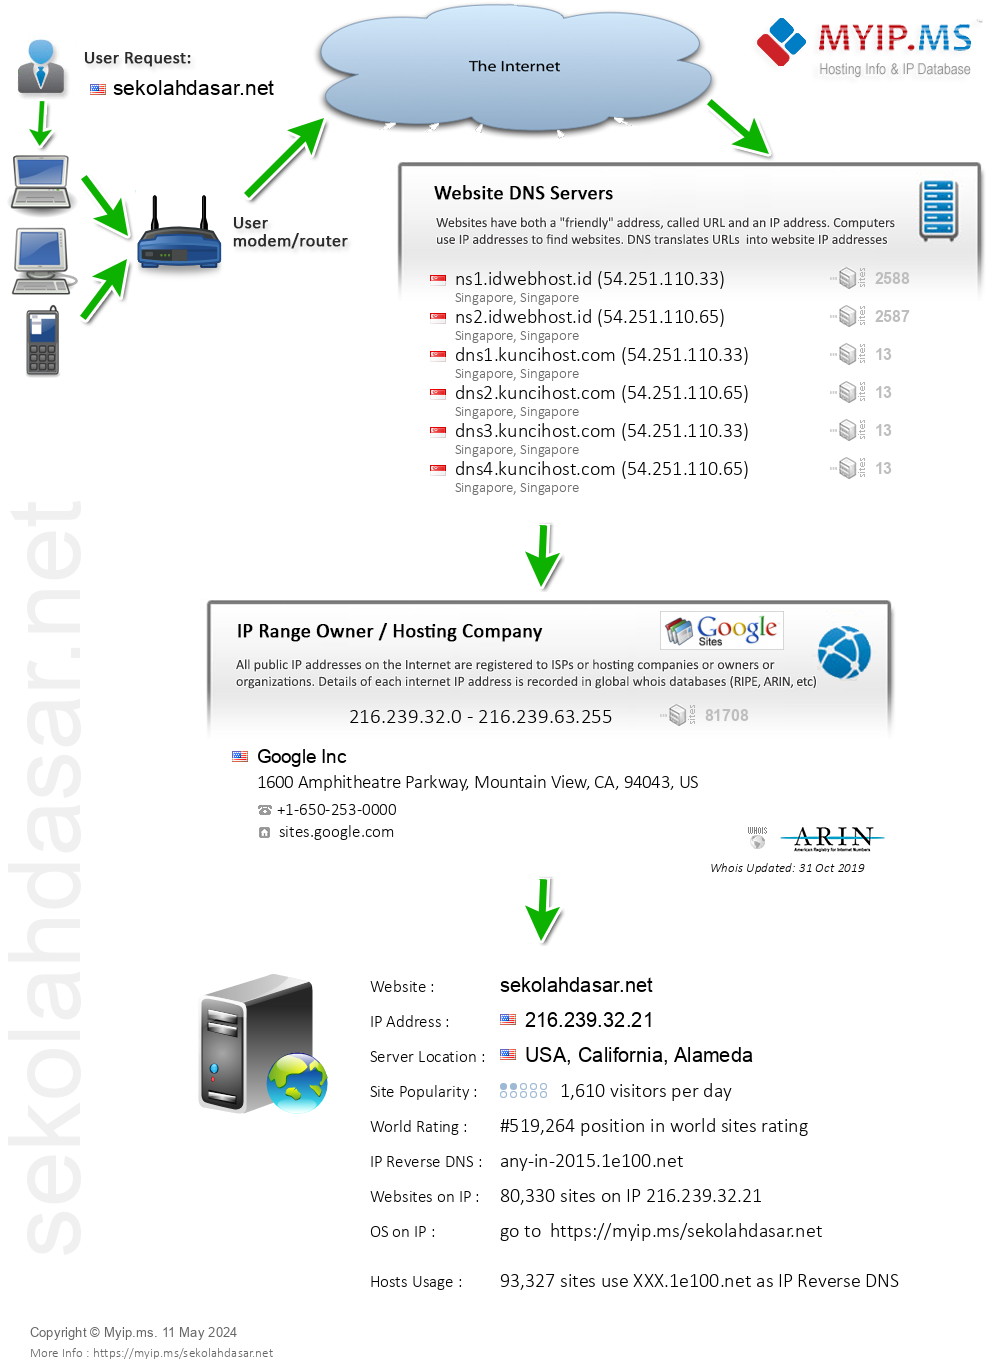 Sekolahdasar.net - Website Hosting Visual IP Diagram